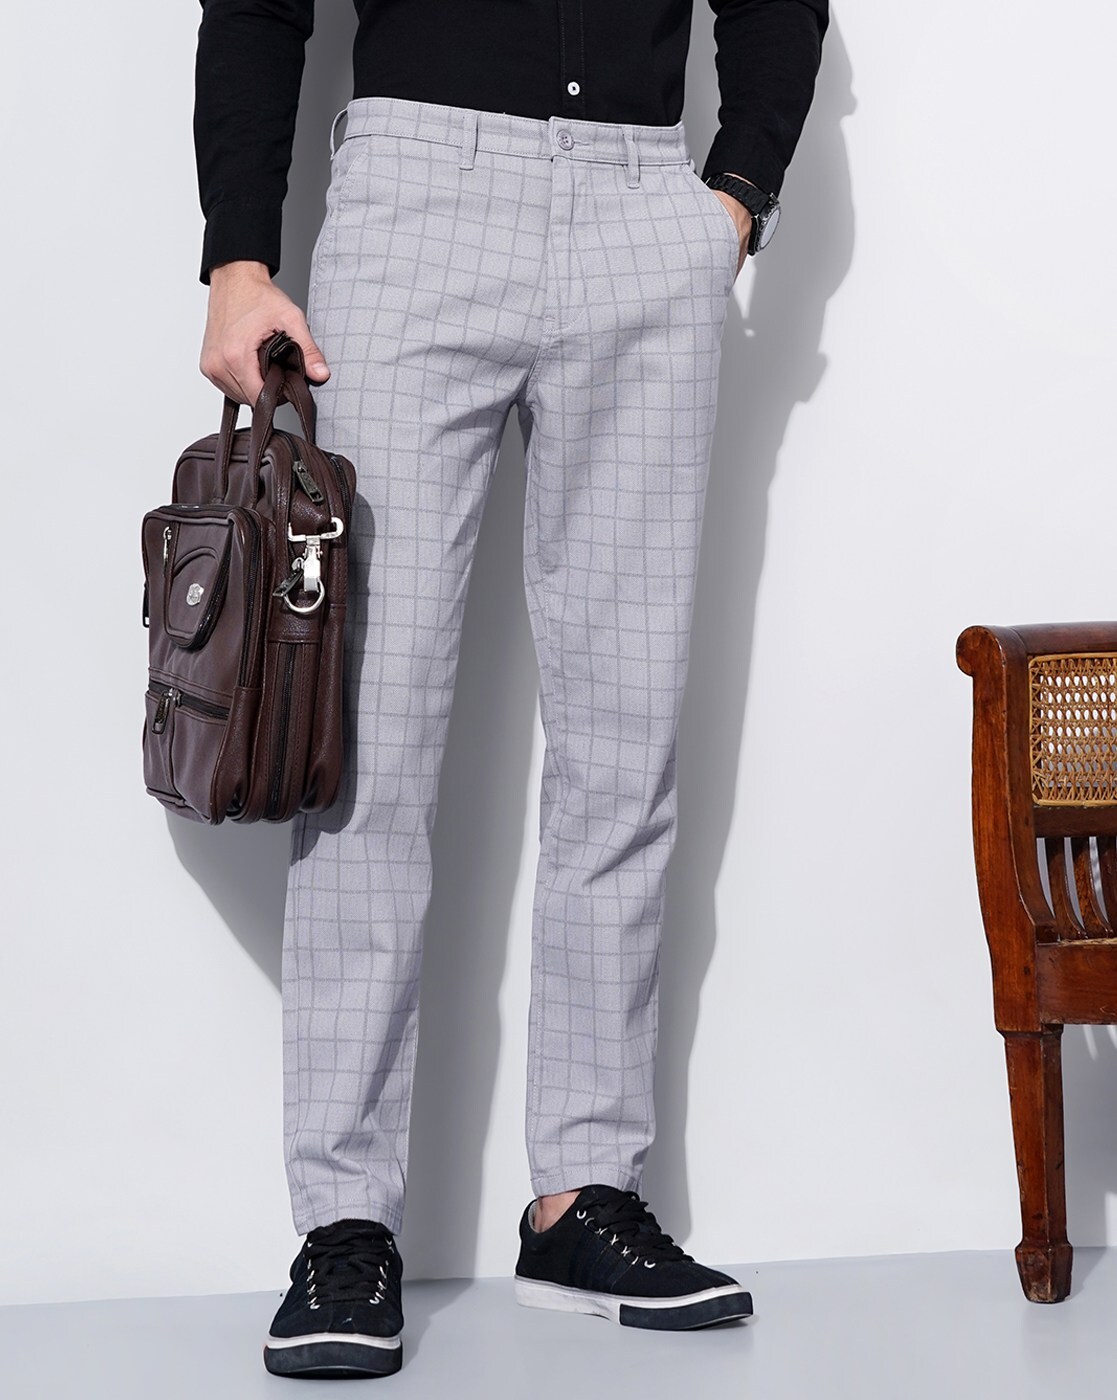 Men's R. Options Corduroy Yarn Dyed Plaid Lounge Pants, #42142-75B,  Brick/Green/Navy (L & XL, ONLY!) - Richard David for Men